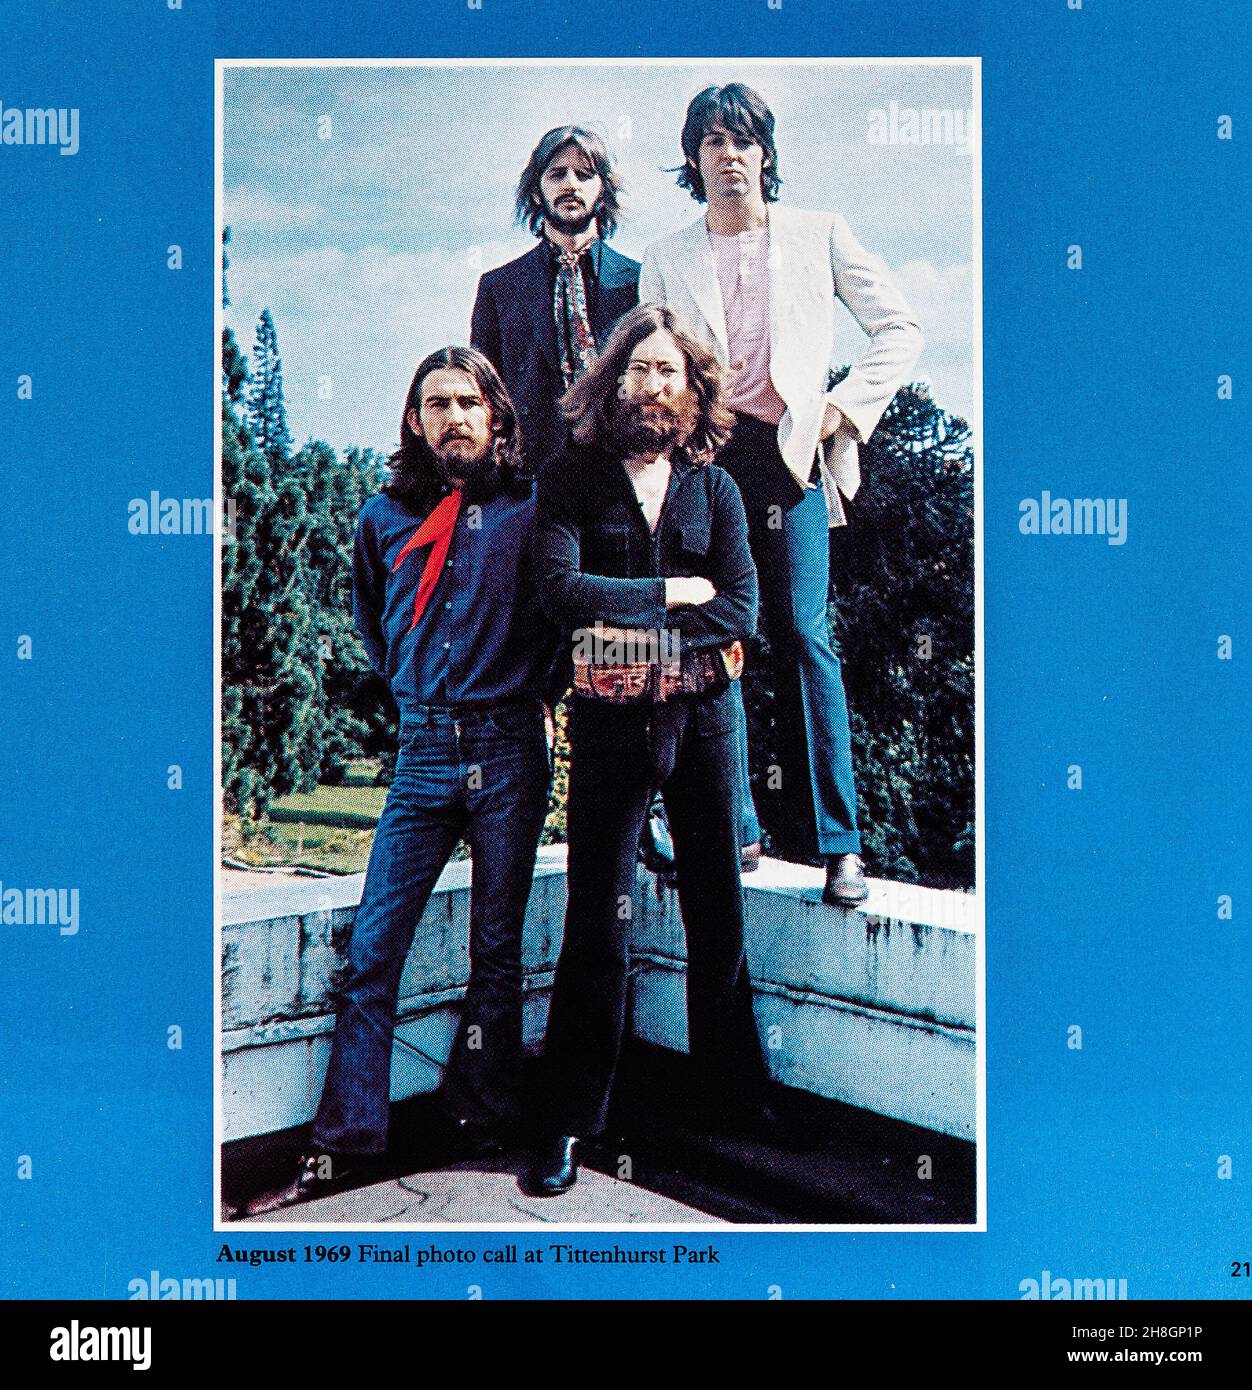 EMI Inlay - The Beatles / 1967-1970. Stock Photo